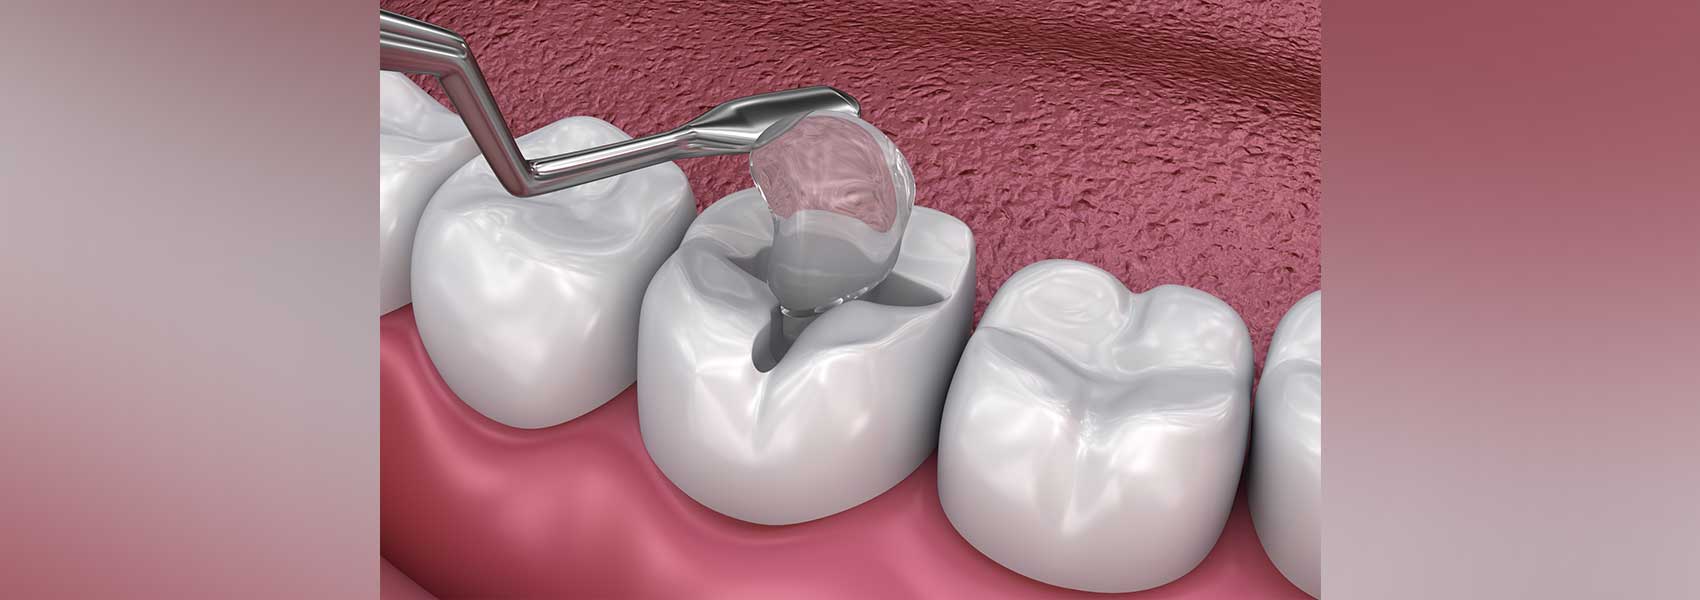 Dental fillings